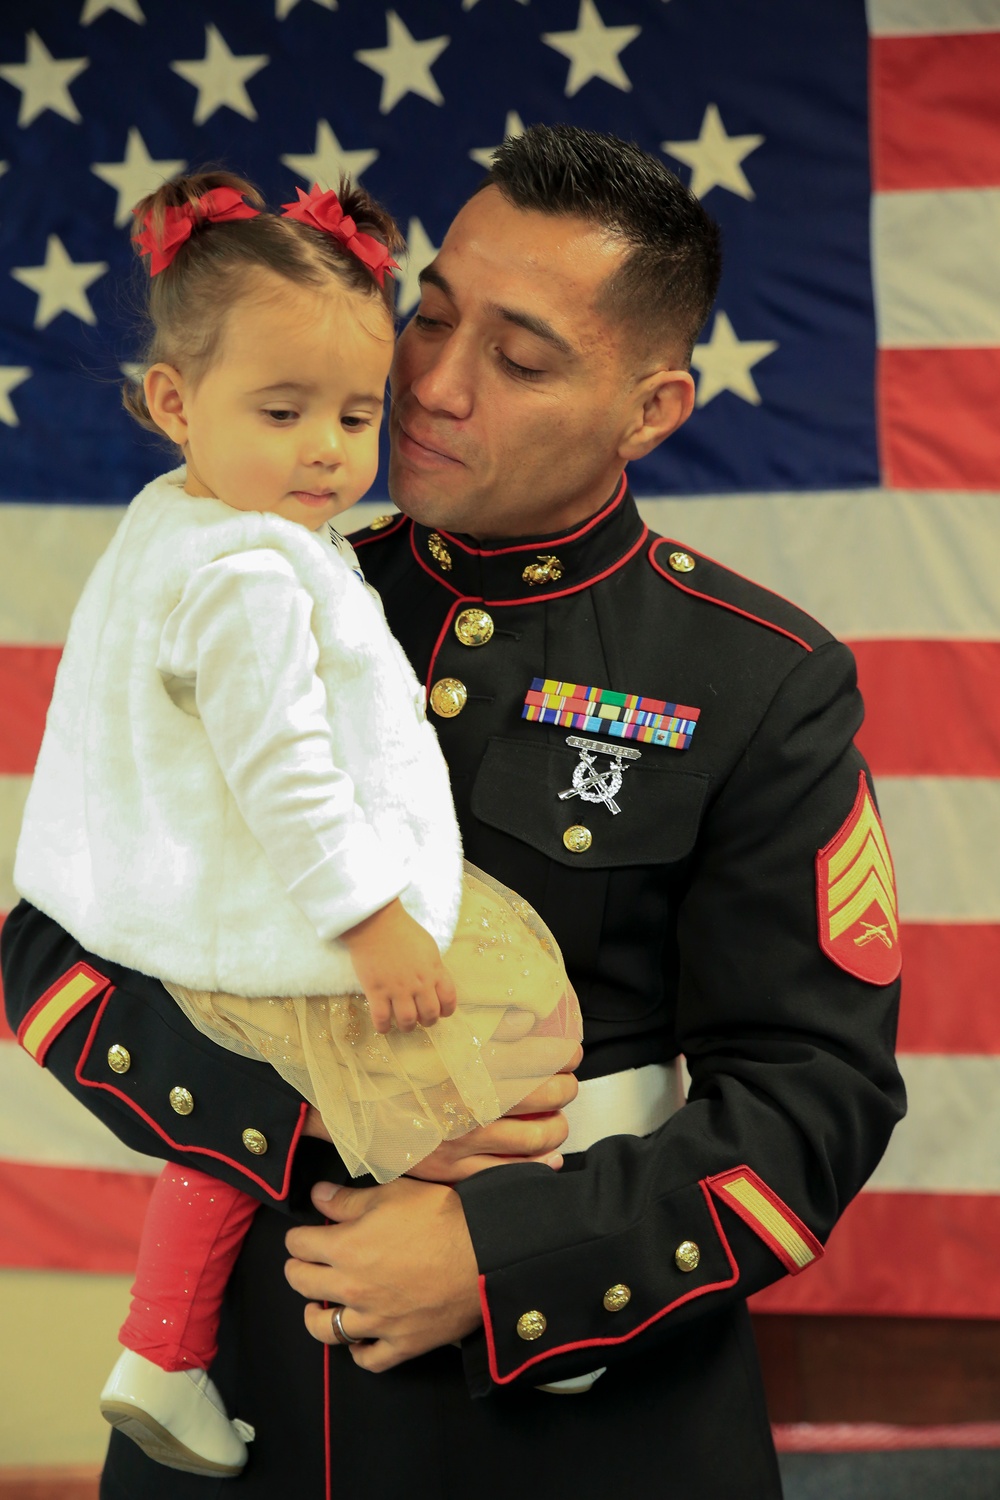 Marine Corps veteran Sgt. Eubaldo Lovato receives award upgrade to Silver Star